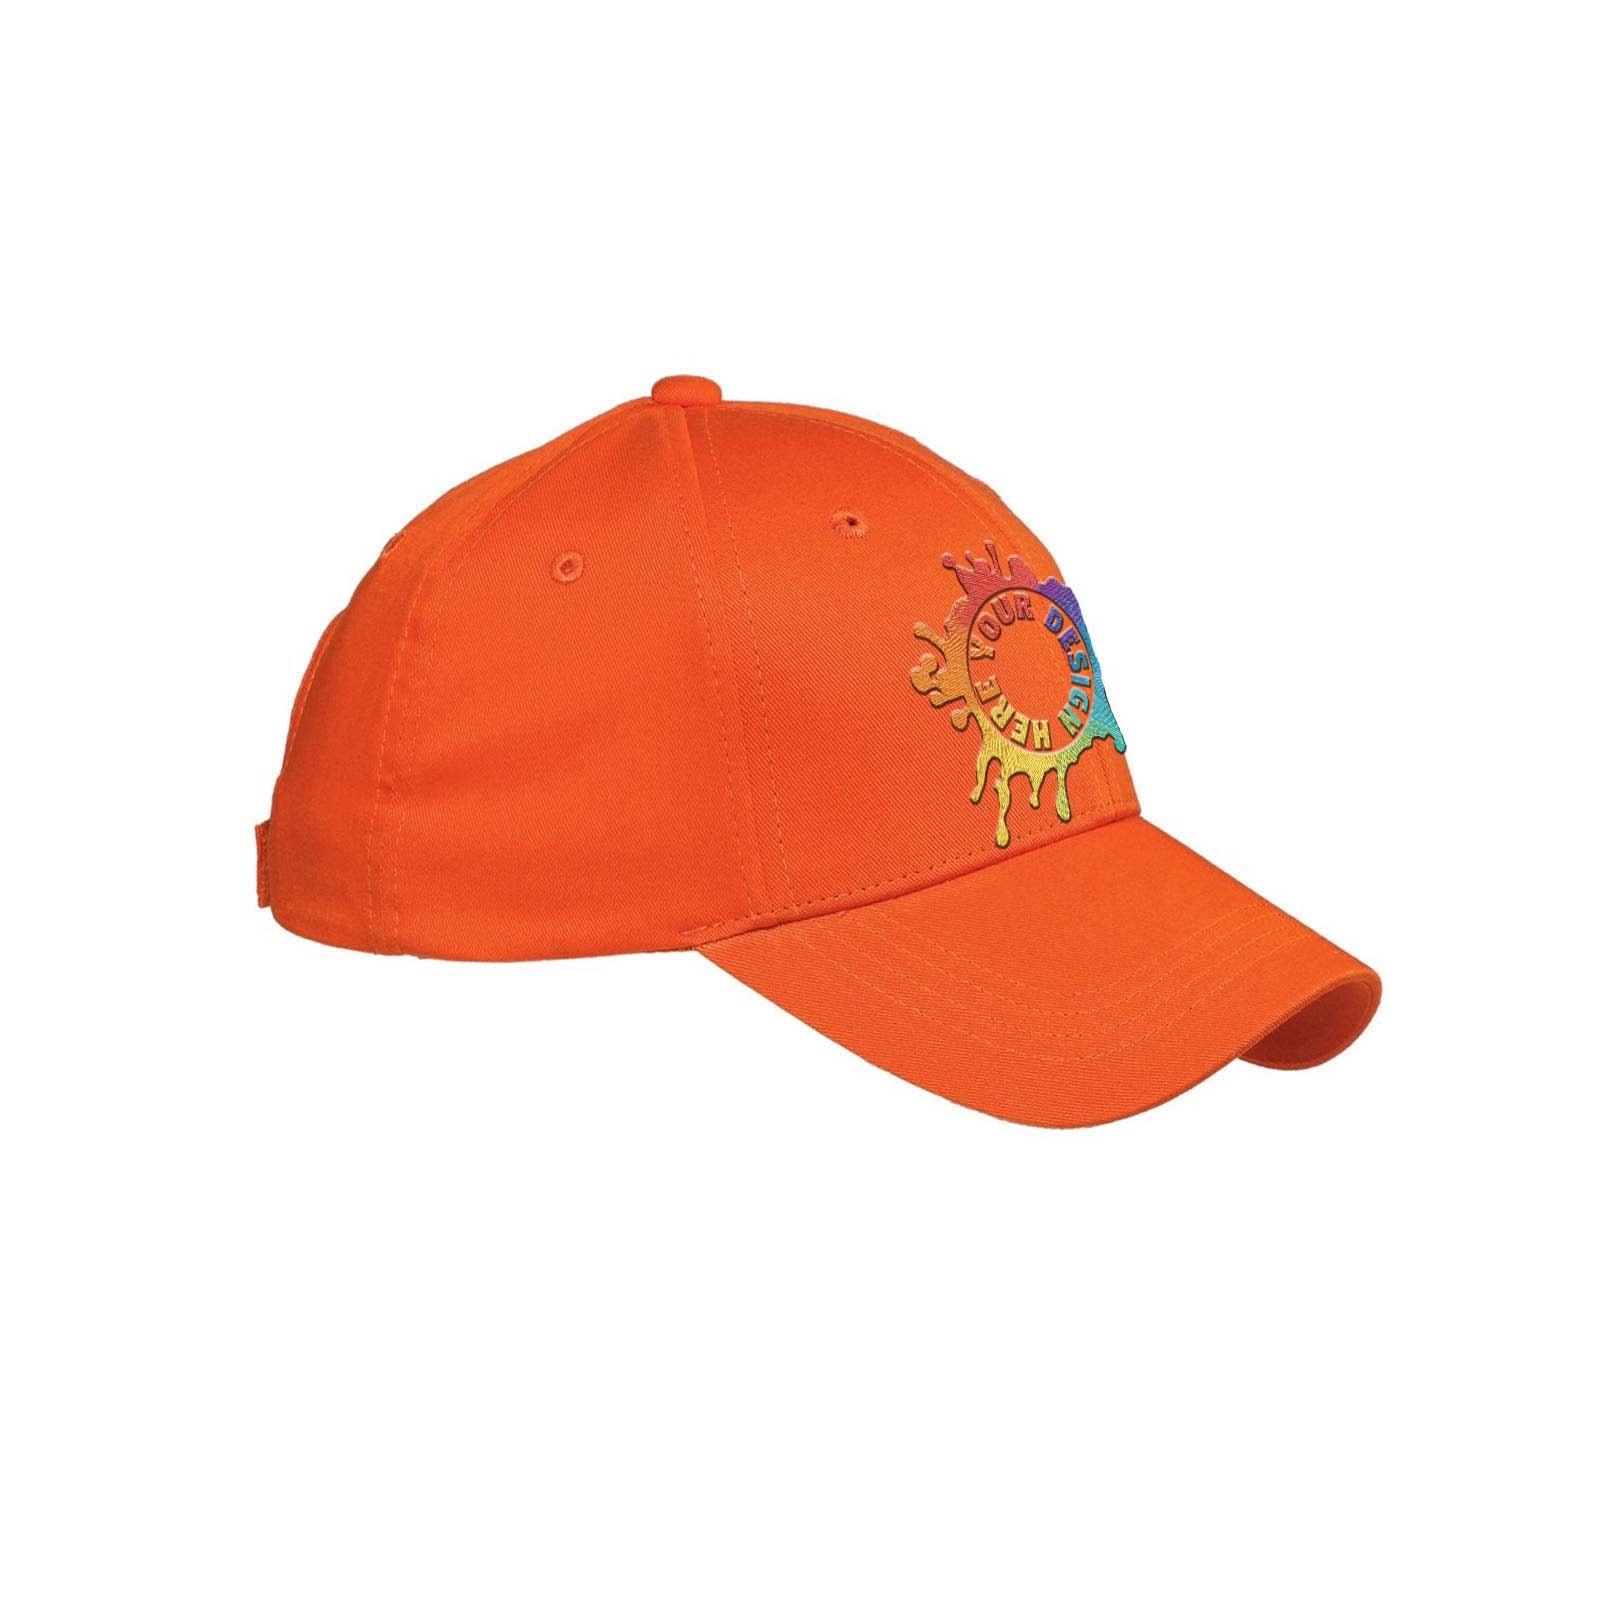 Love Baseball Mom Mesh Embroidered MESH Hat Cap -220